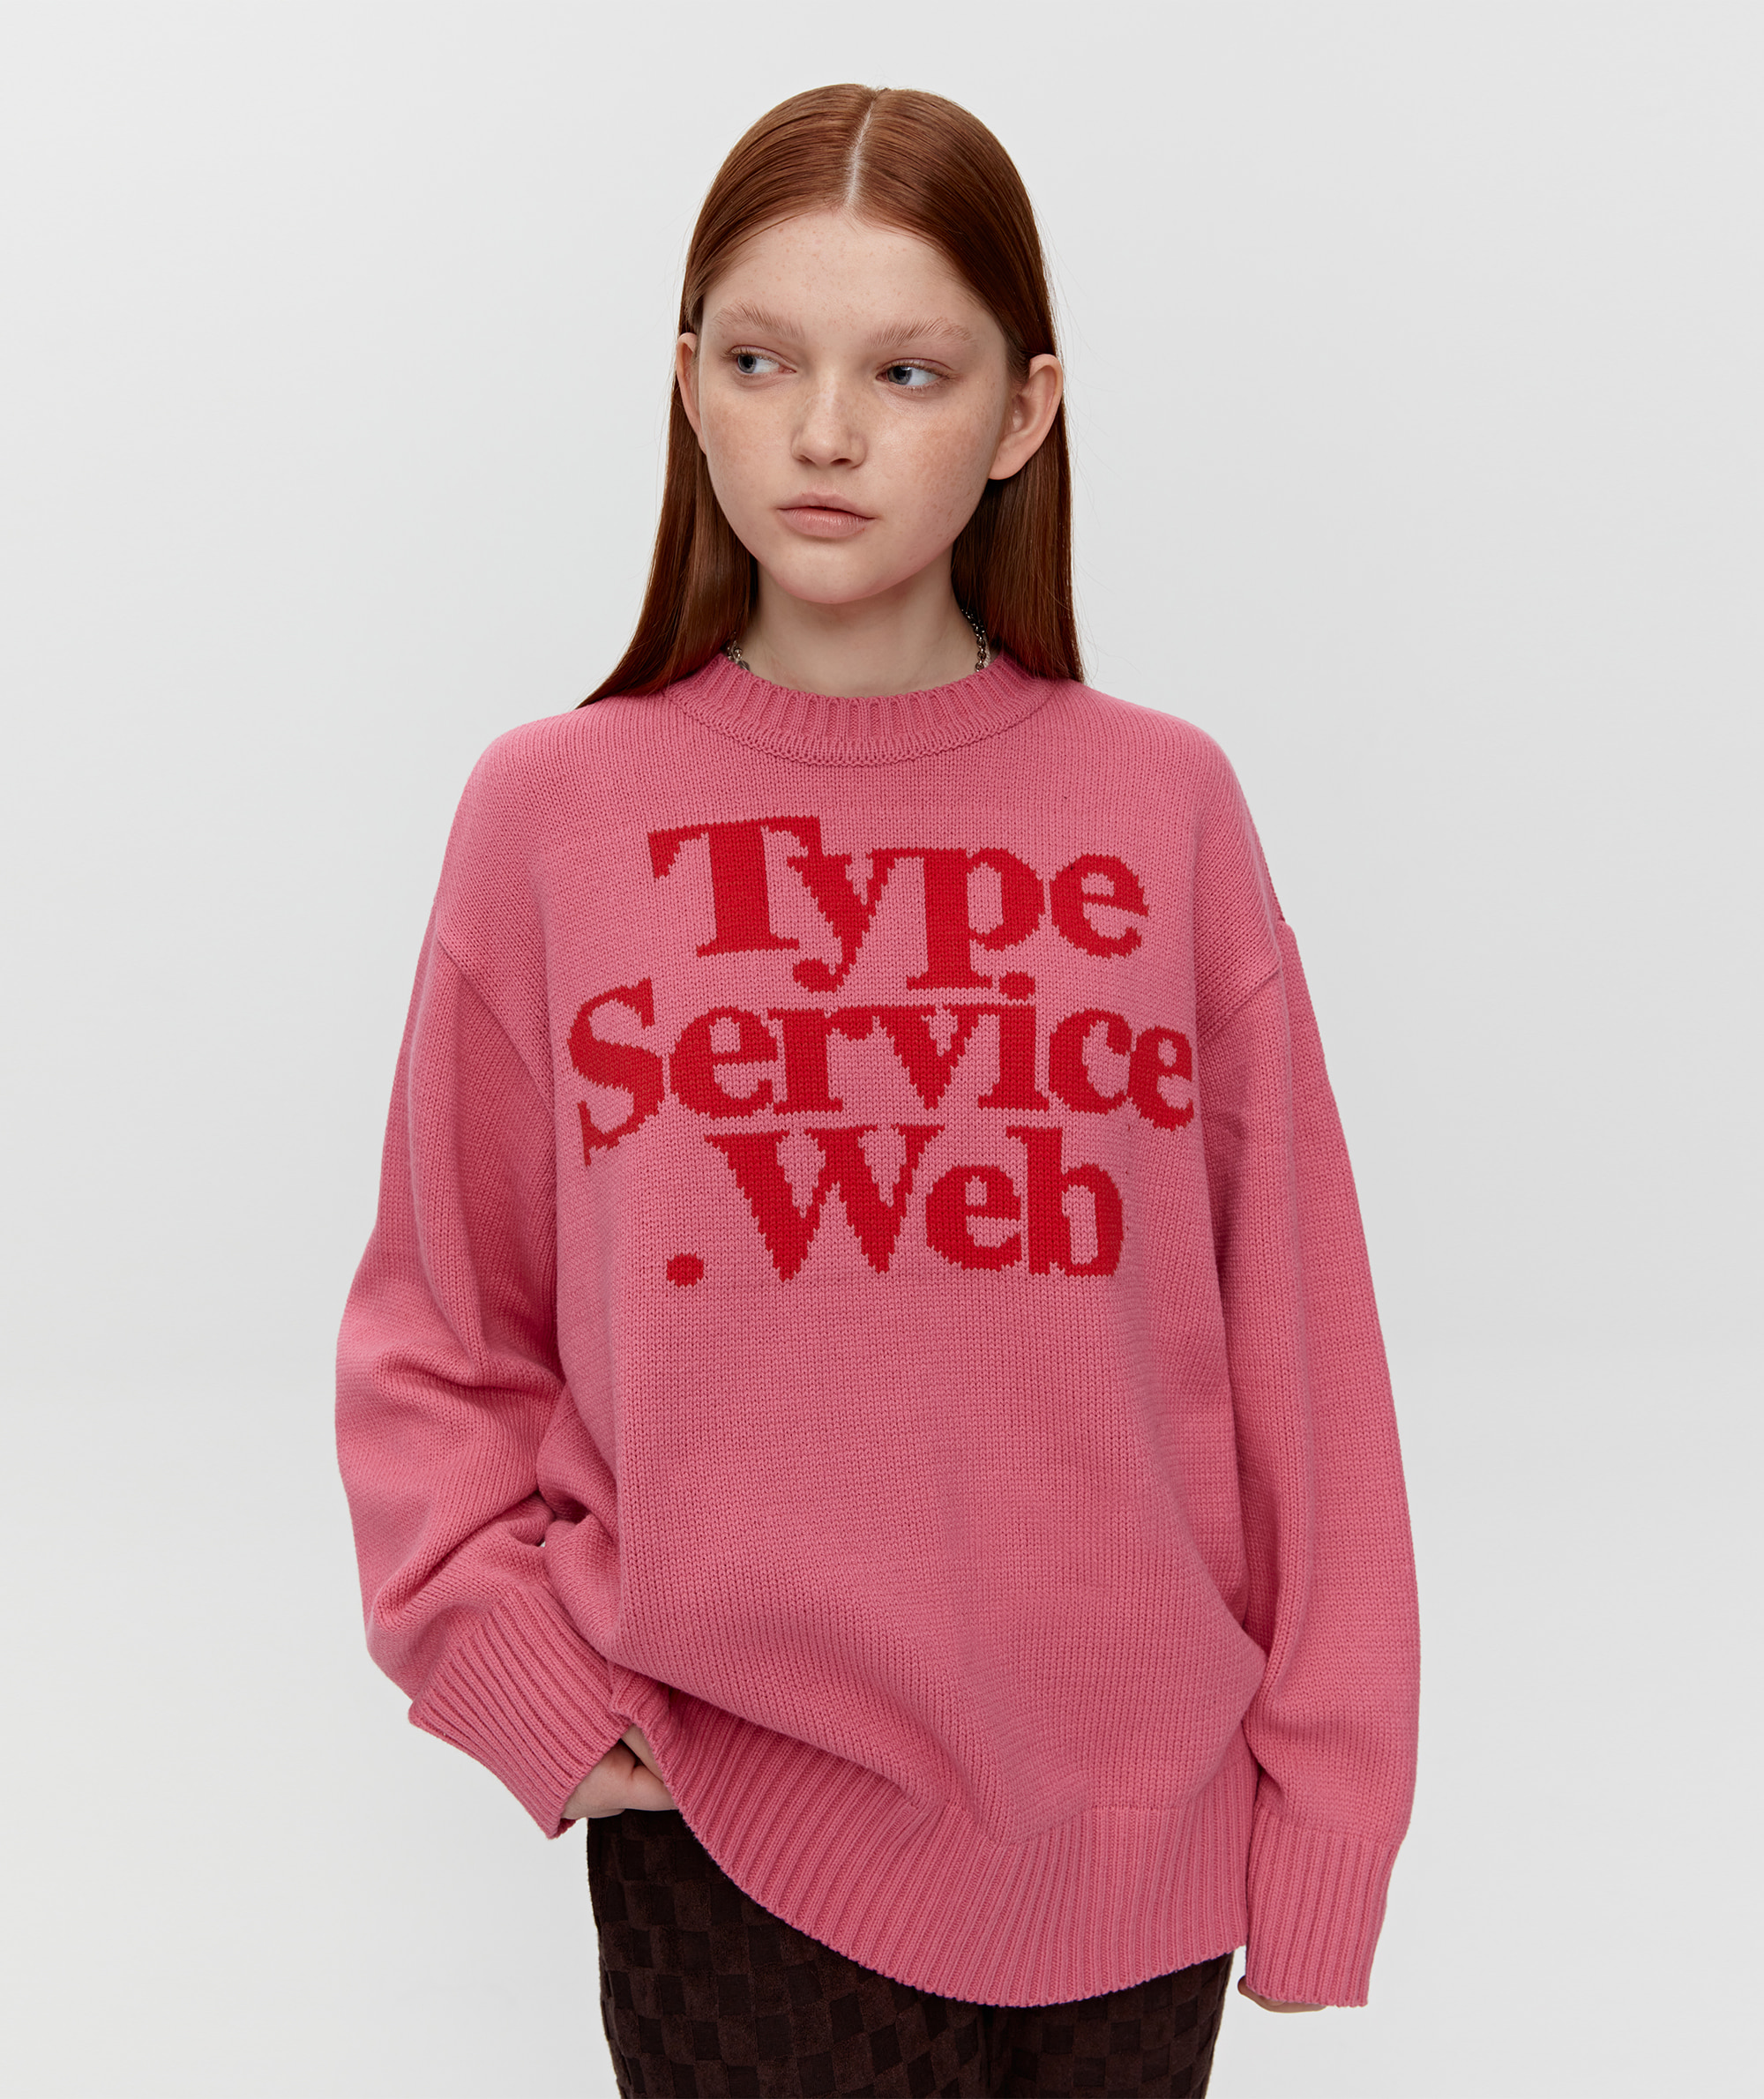 Typeservice Web Knit [Pink]